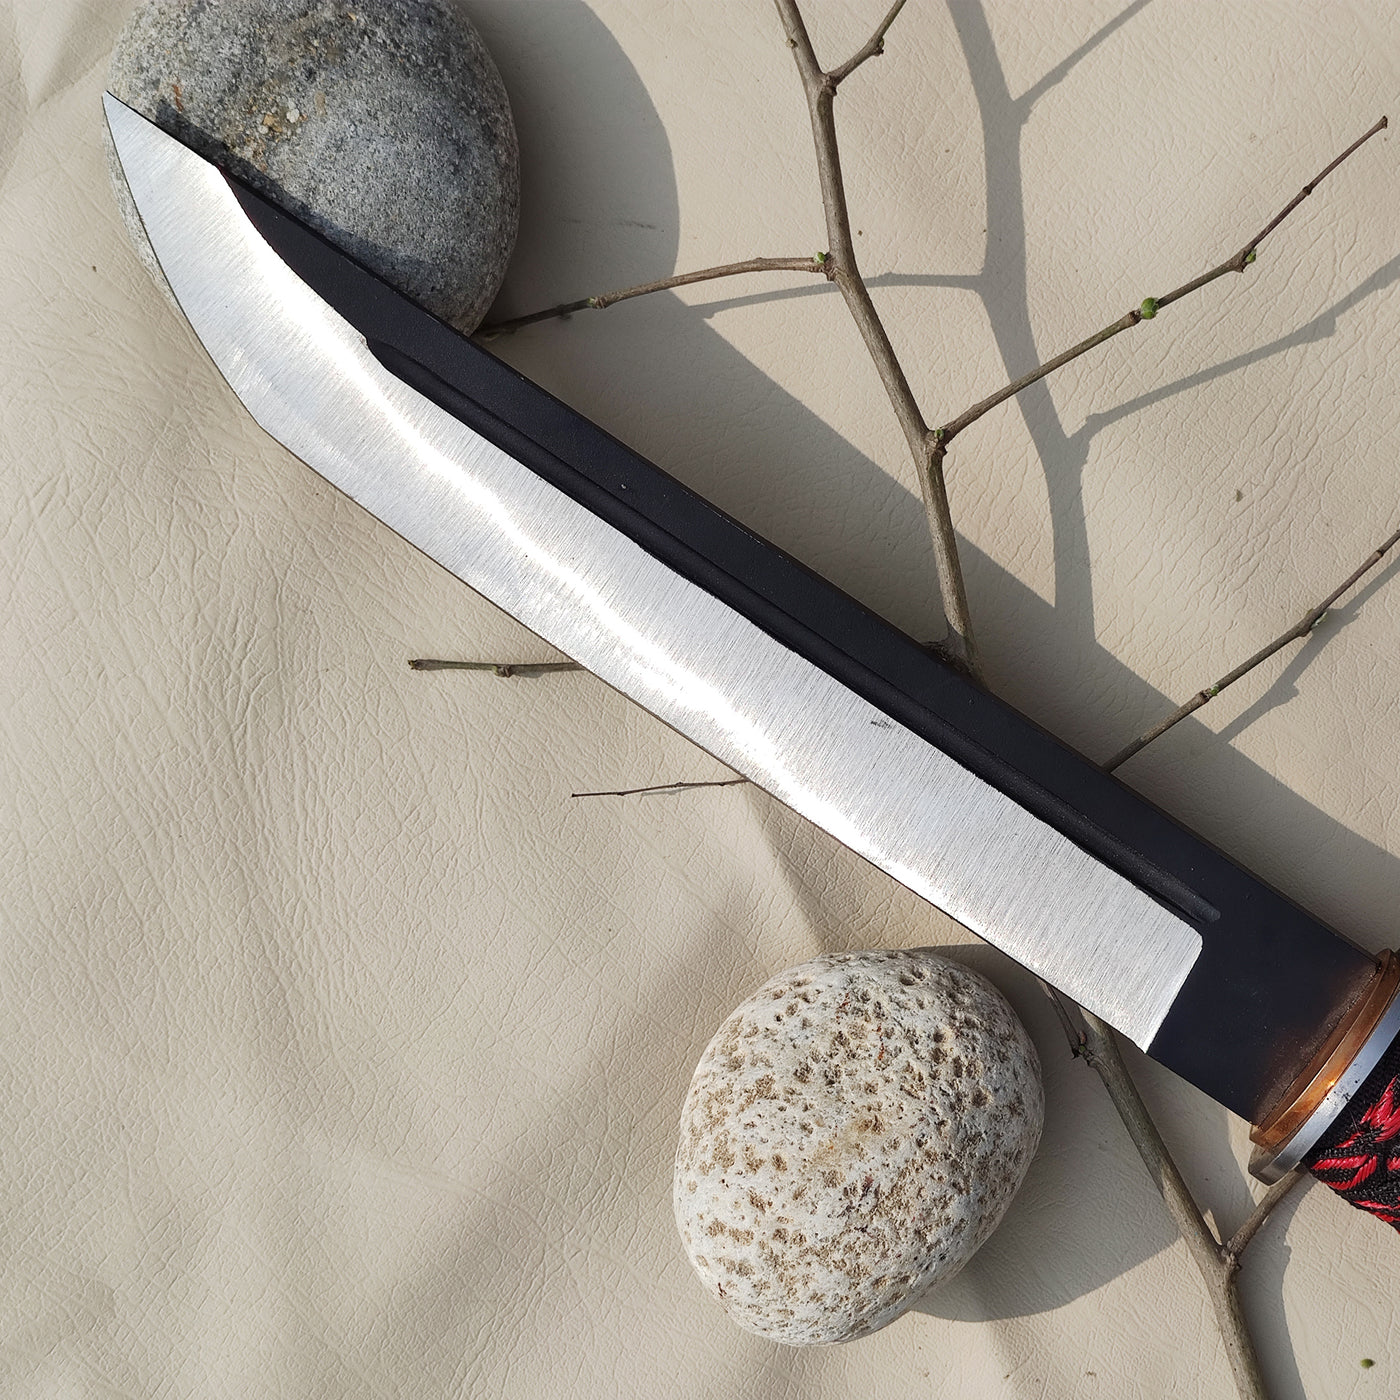 Handmade Hunting Knife